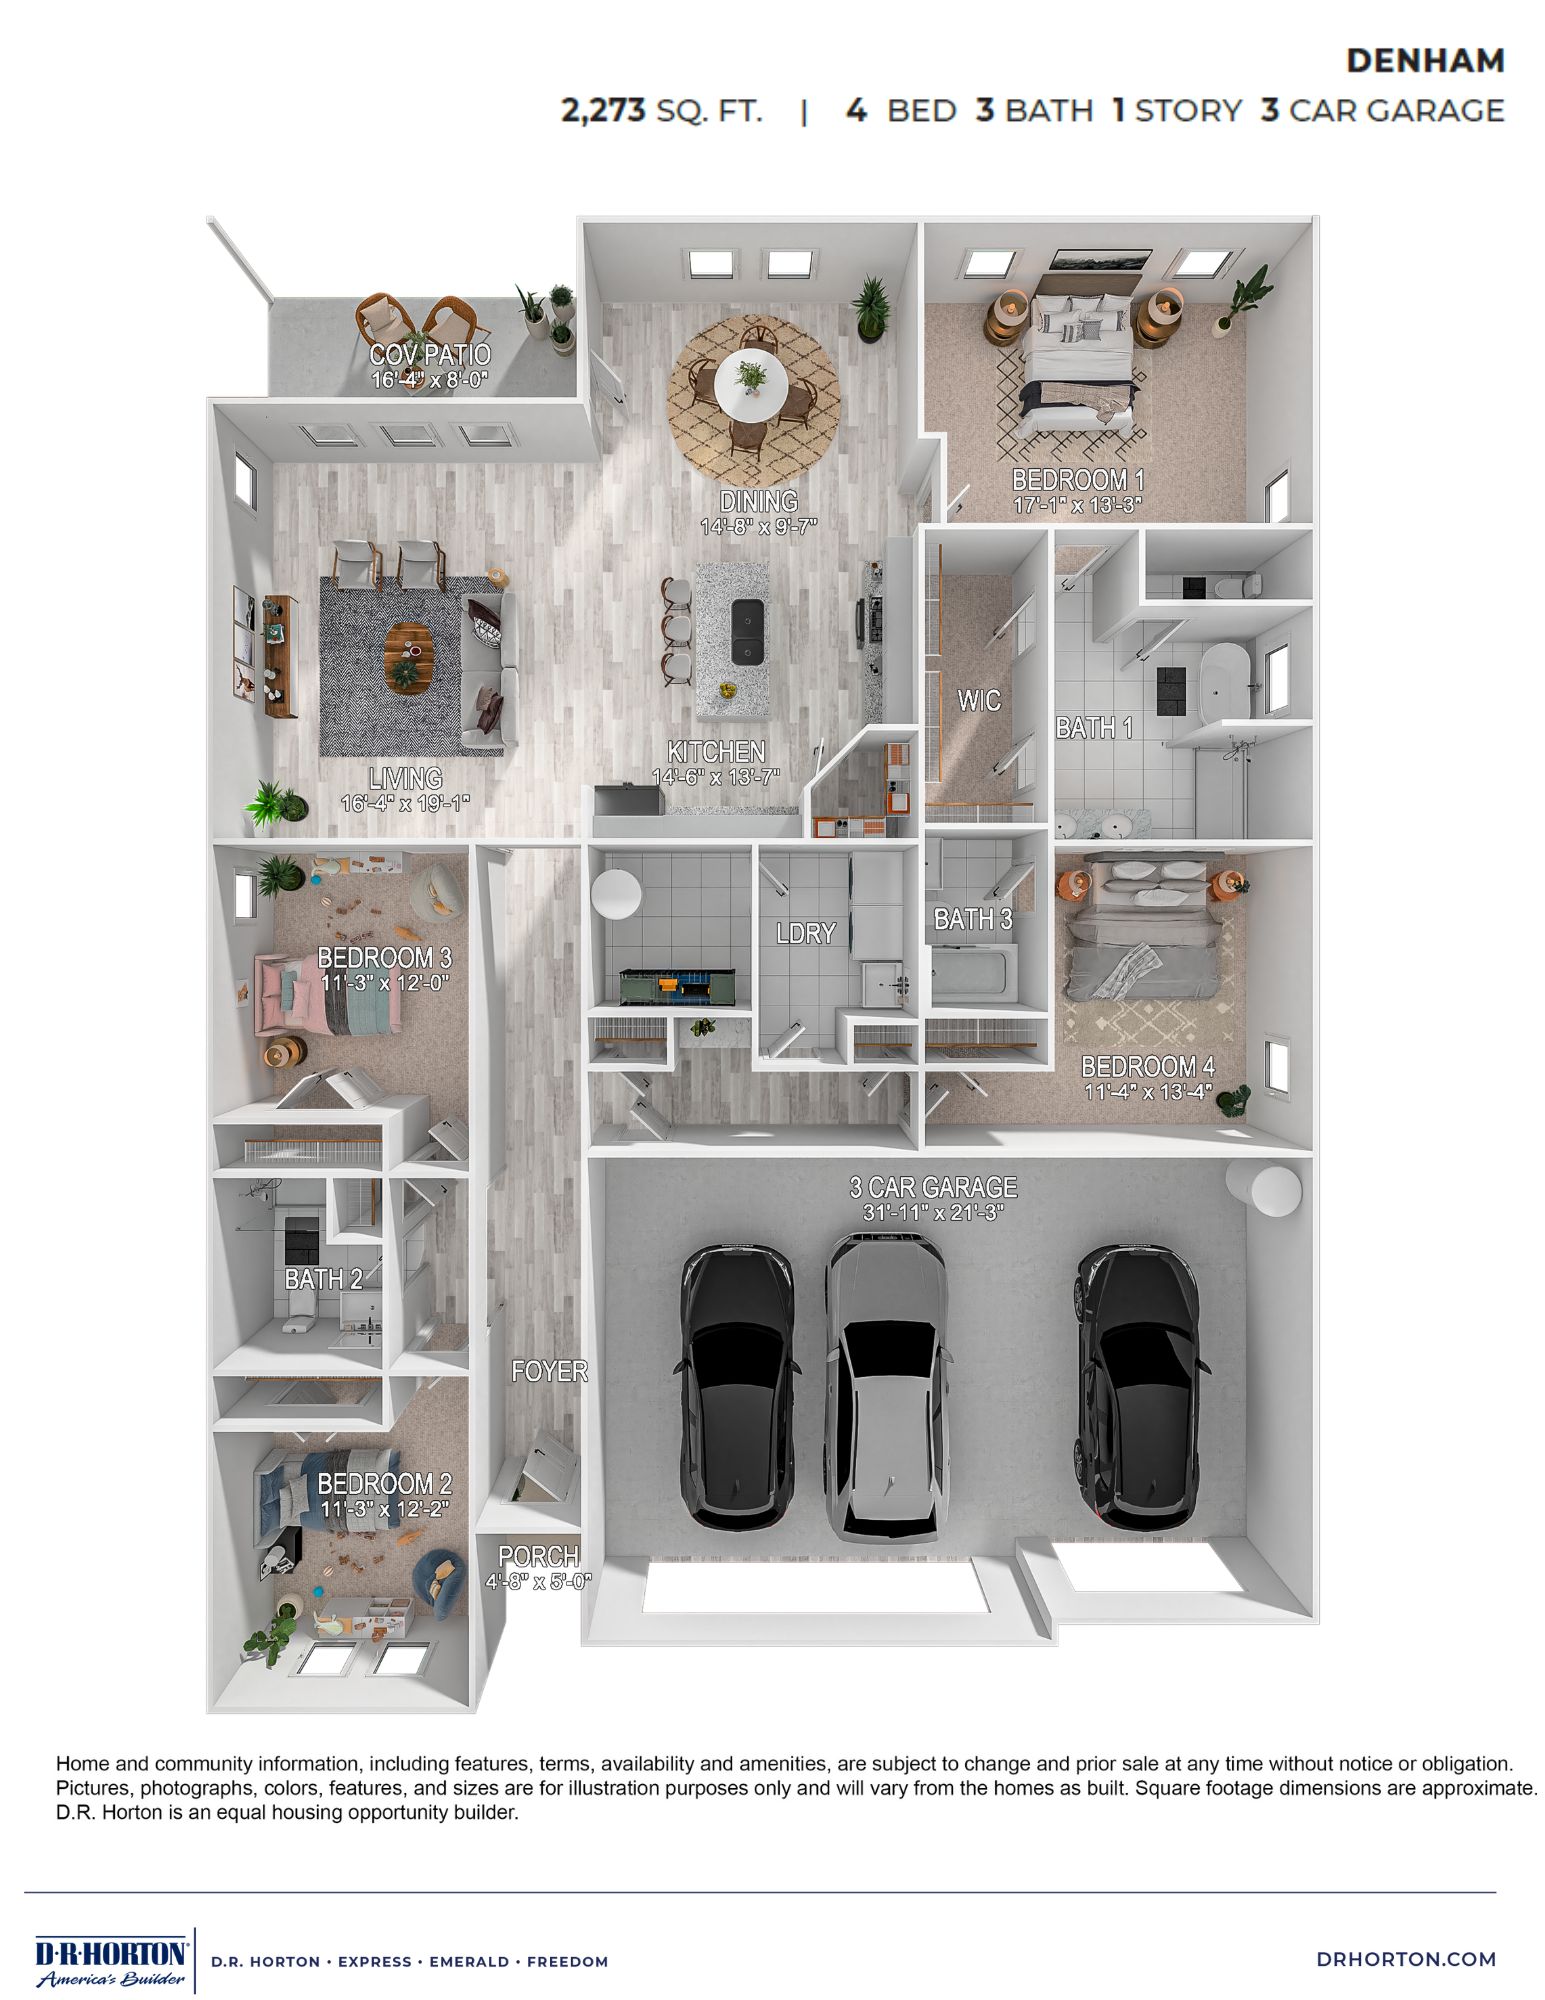 Denham Furnished Floor Plan